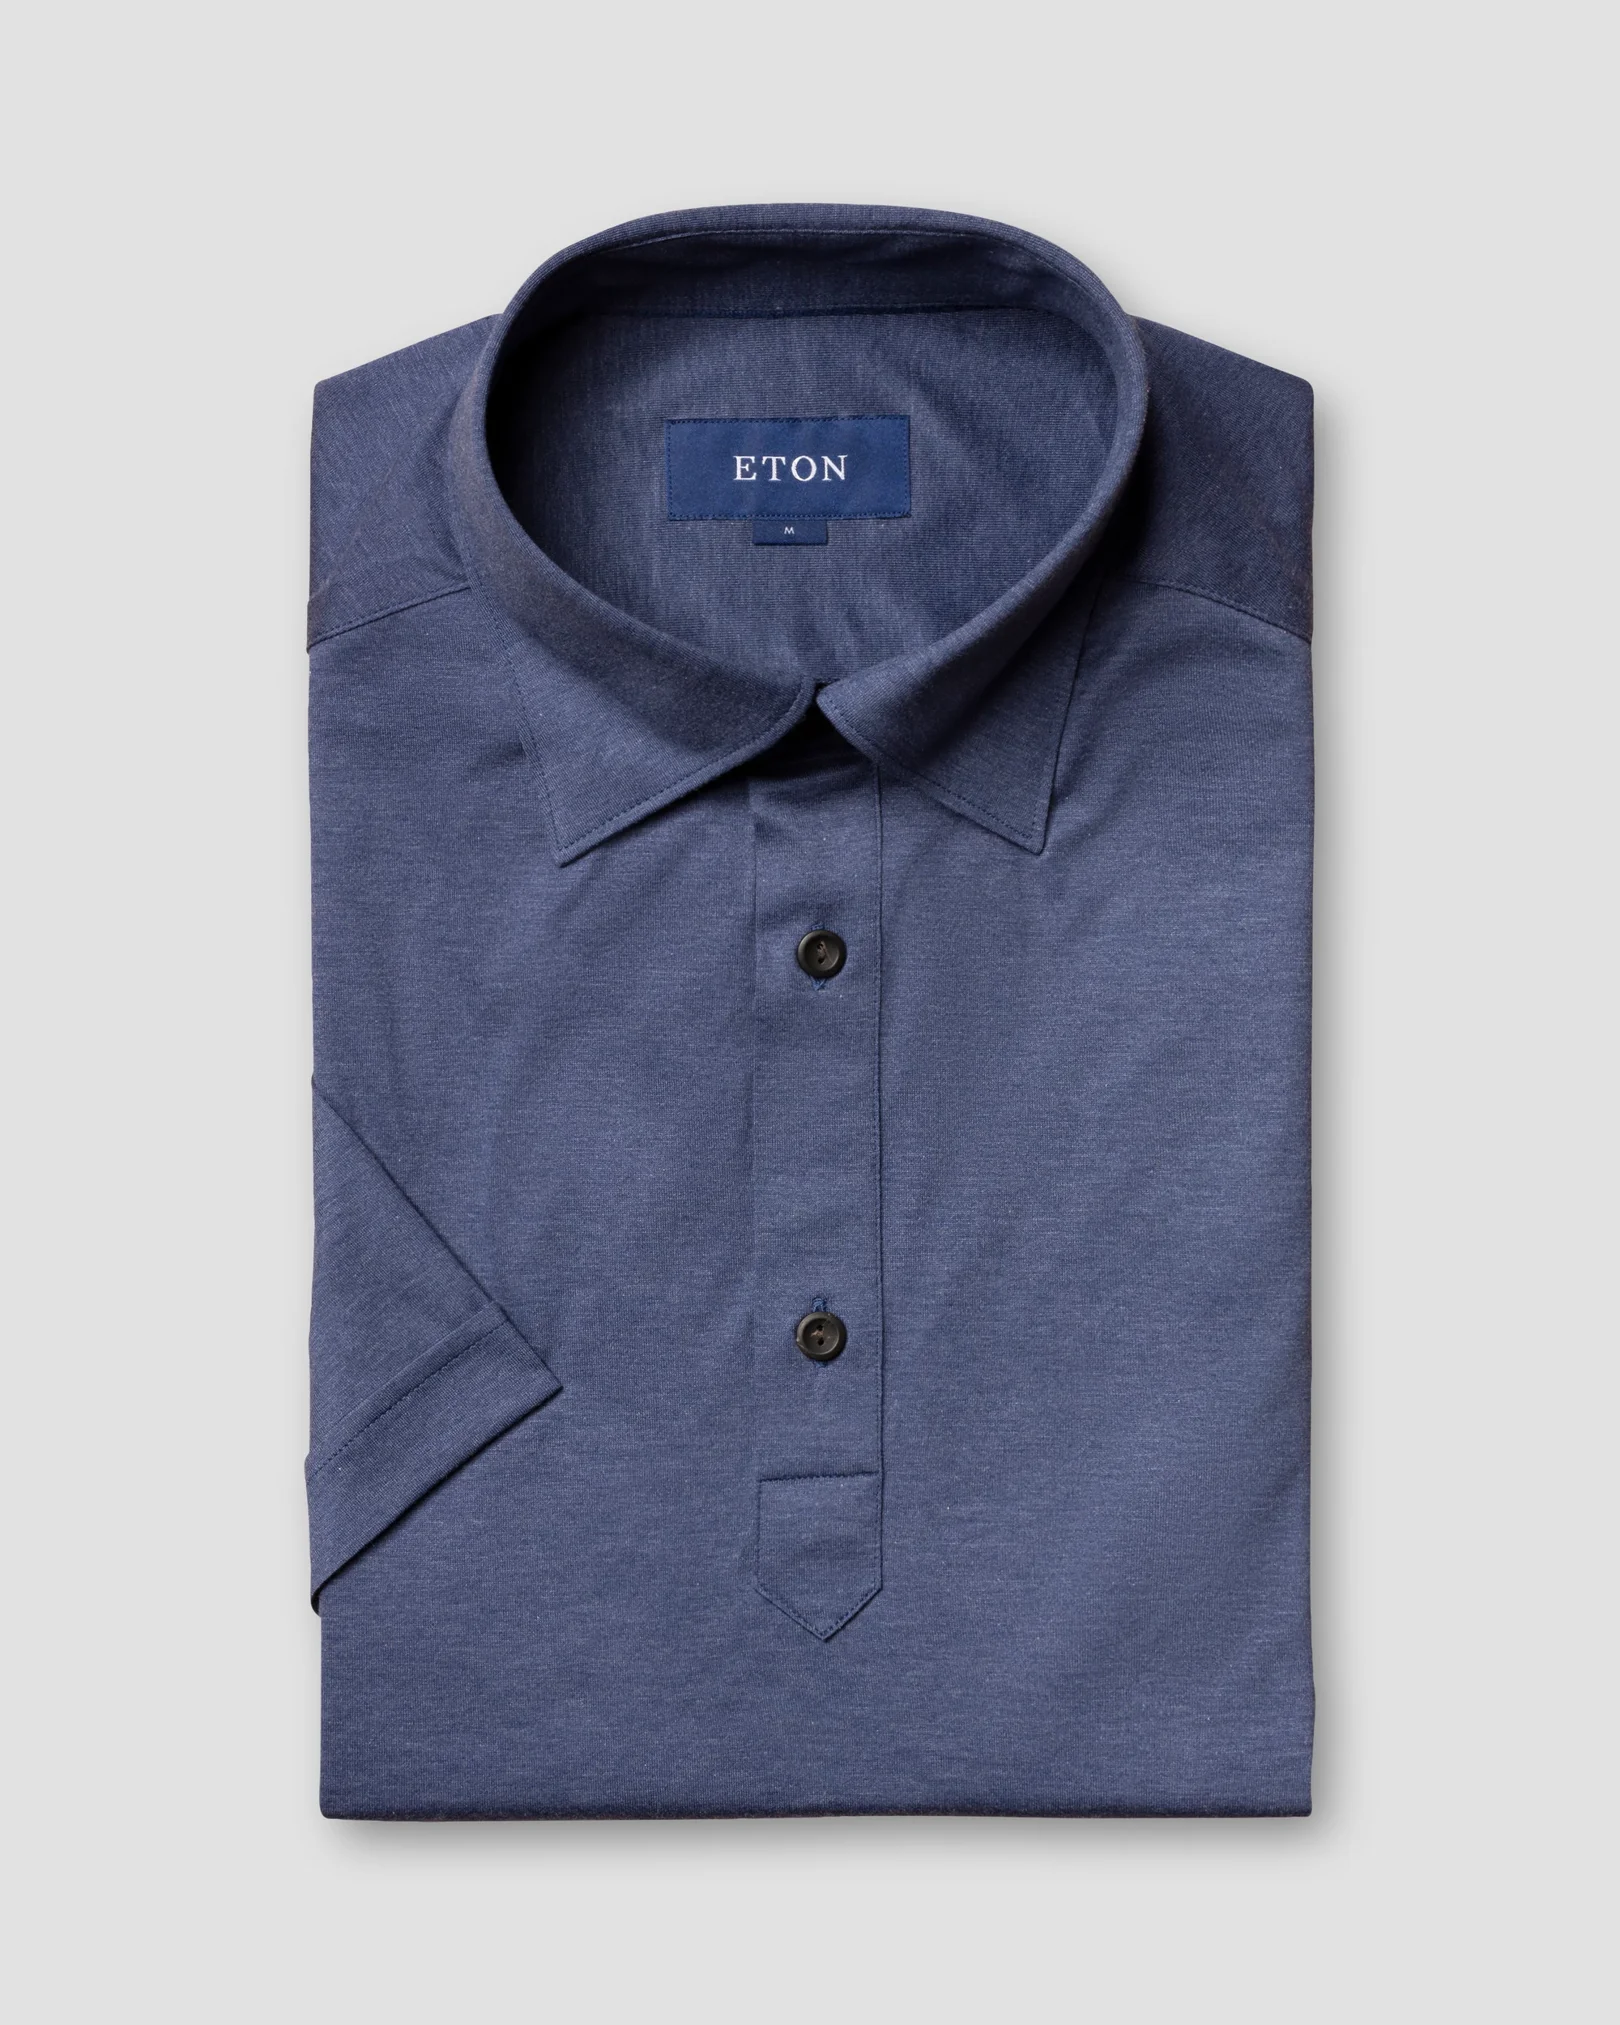 Eton - navy jersey popover shirt short sleeved